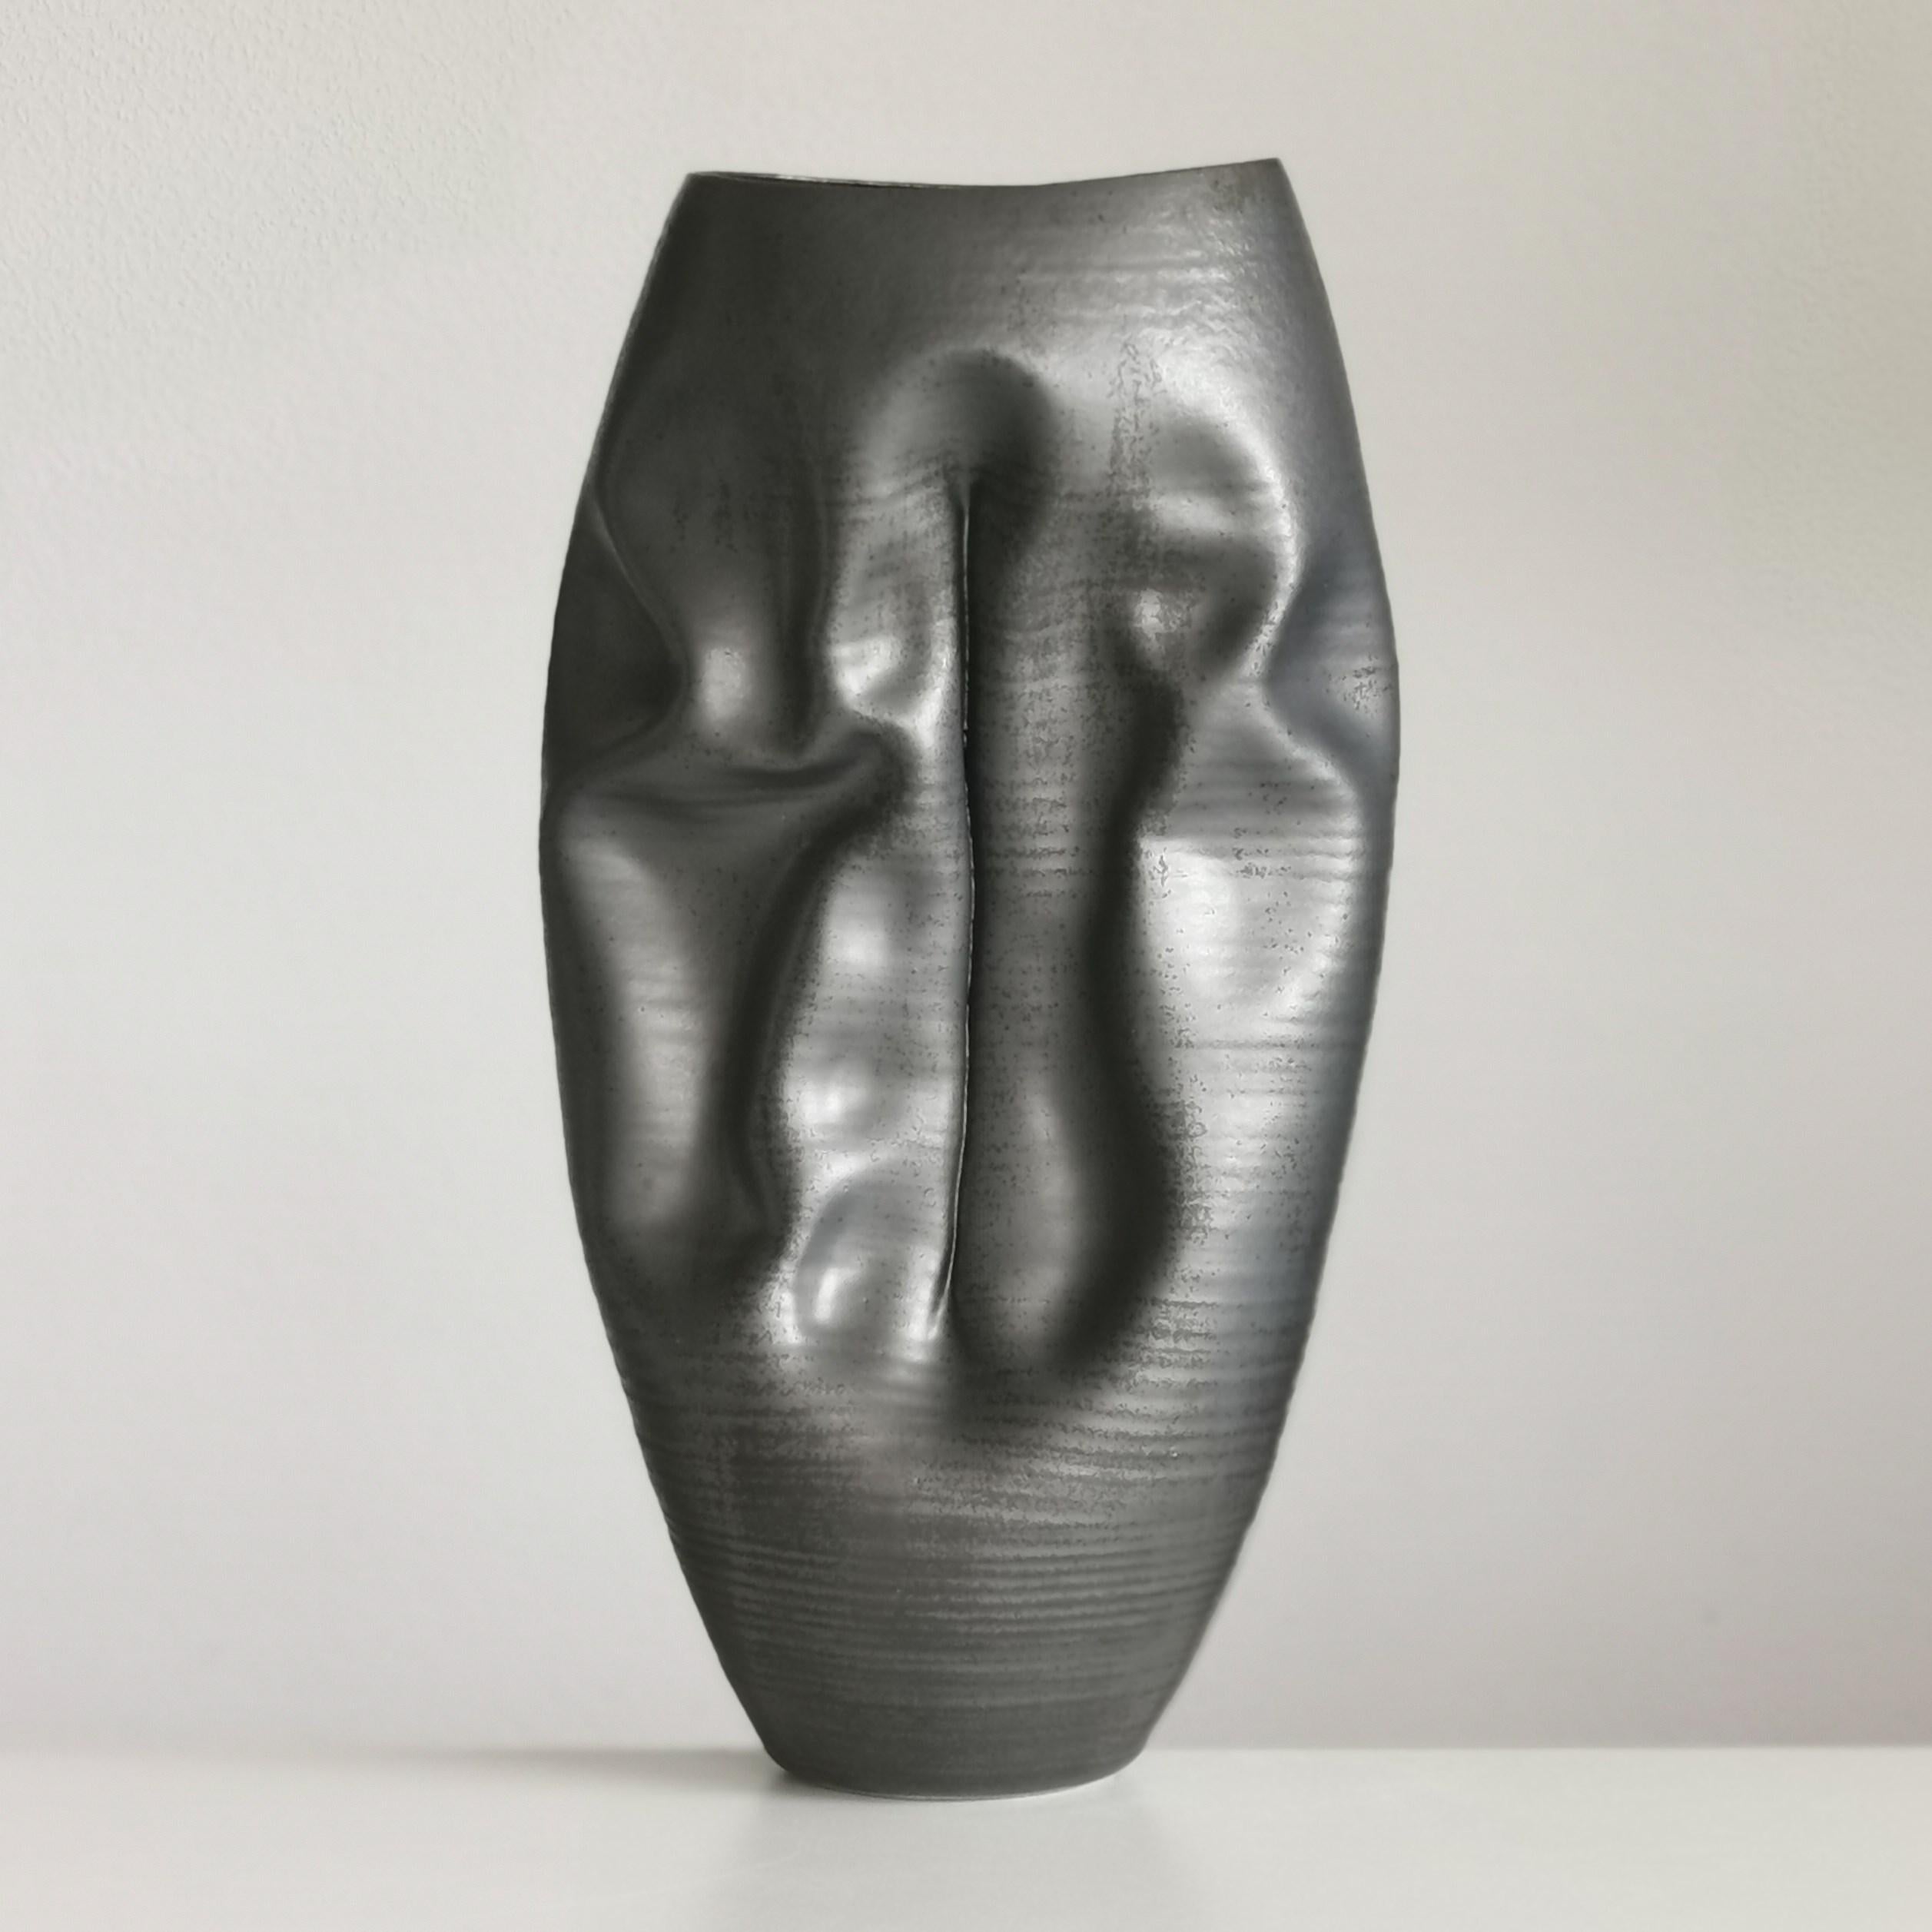 Spanish Undulating Crumpled Form No 70, a Ceramic Vessel by Nicholas Arroyave-Portela For Sale